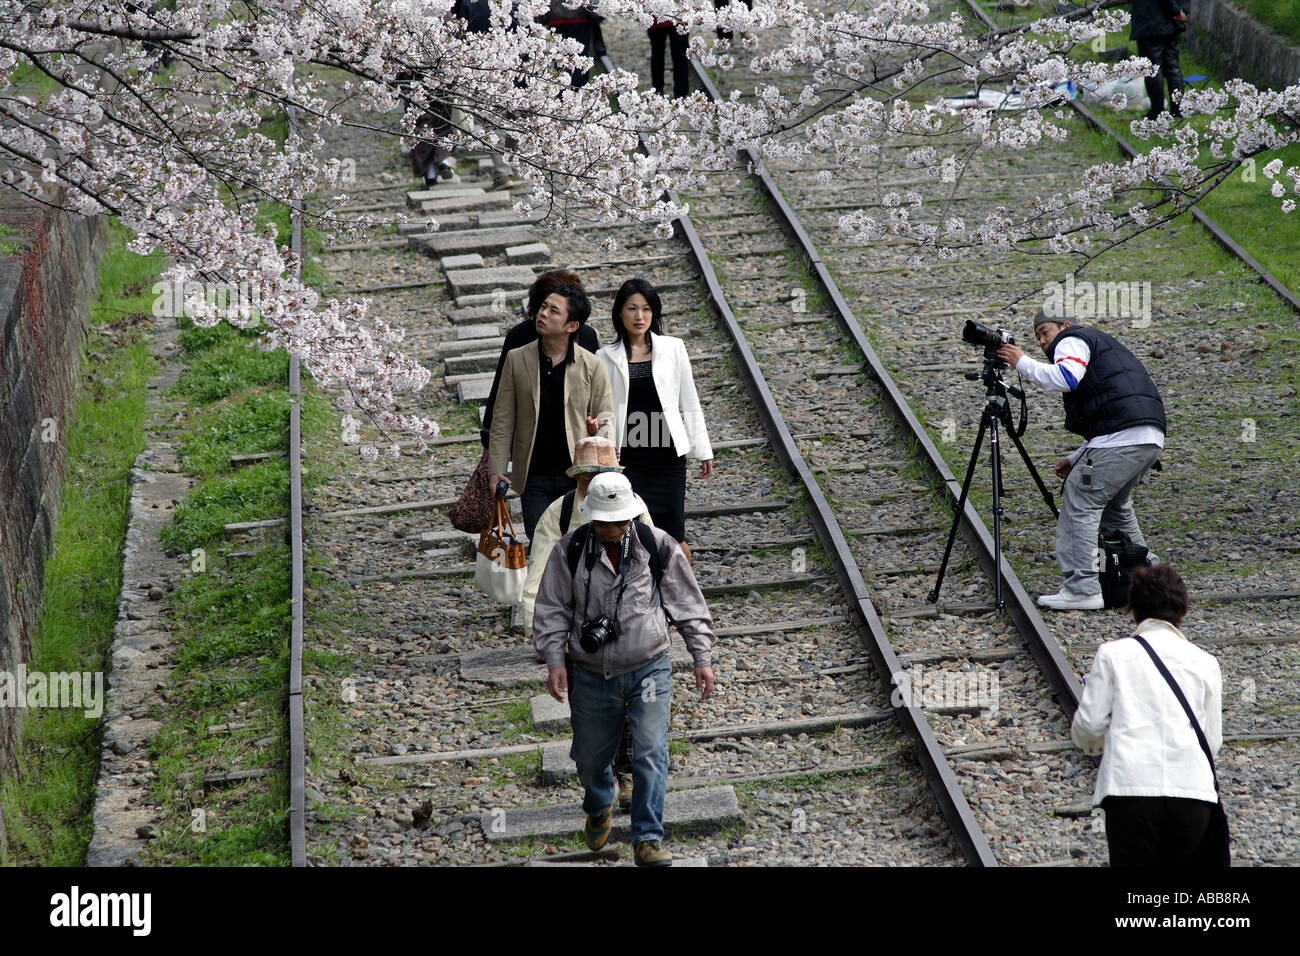 Keage Incline, Railroad Track Turned Hiking Trail, Kyoto, Japan During Cherry Blossom Season Stock Photo